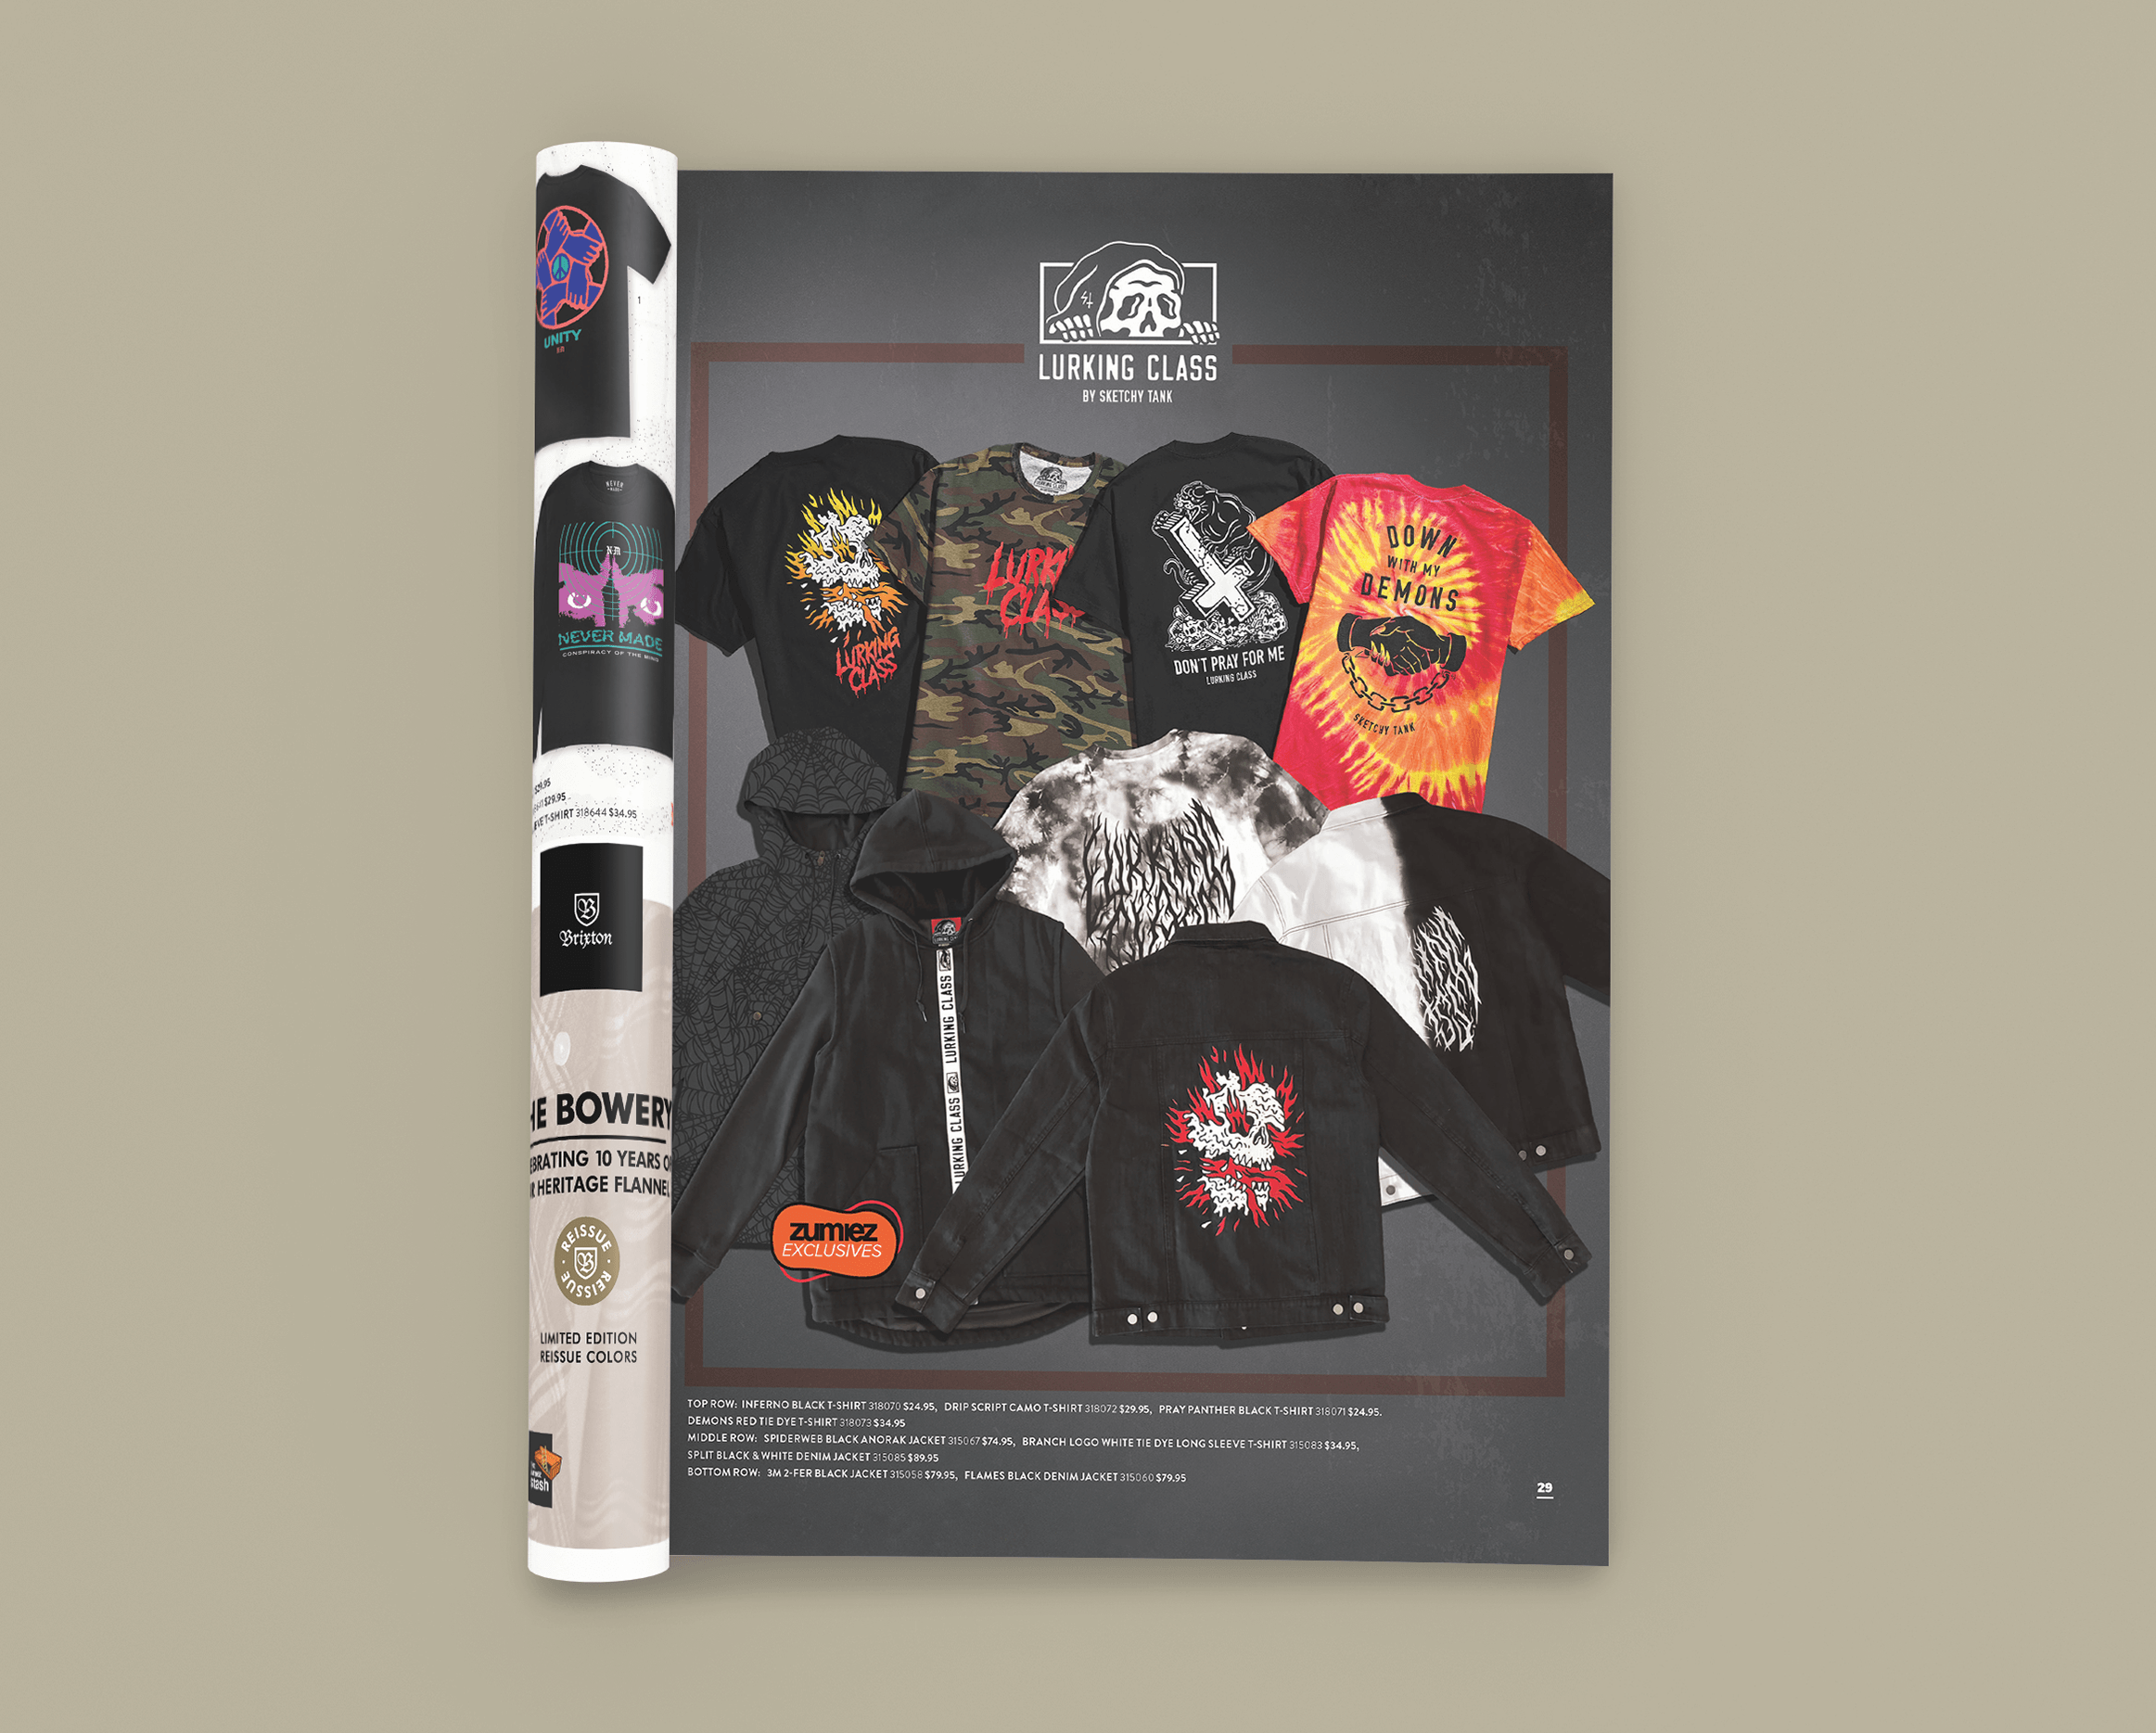 Zumiez Catalog page featuring Lurking Class t-shirts and sweatshirts on a dark grey background.